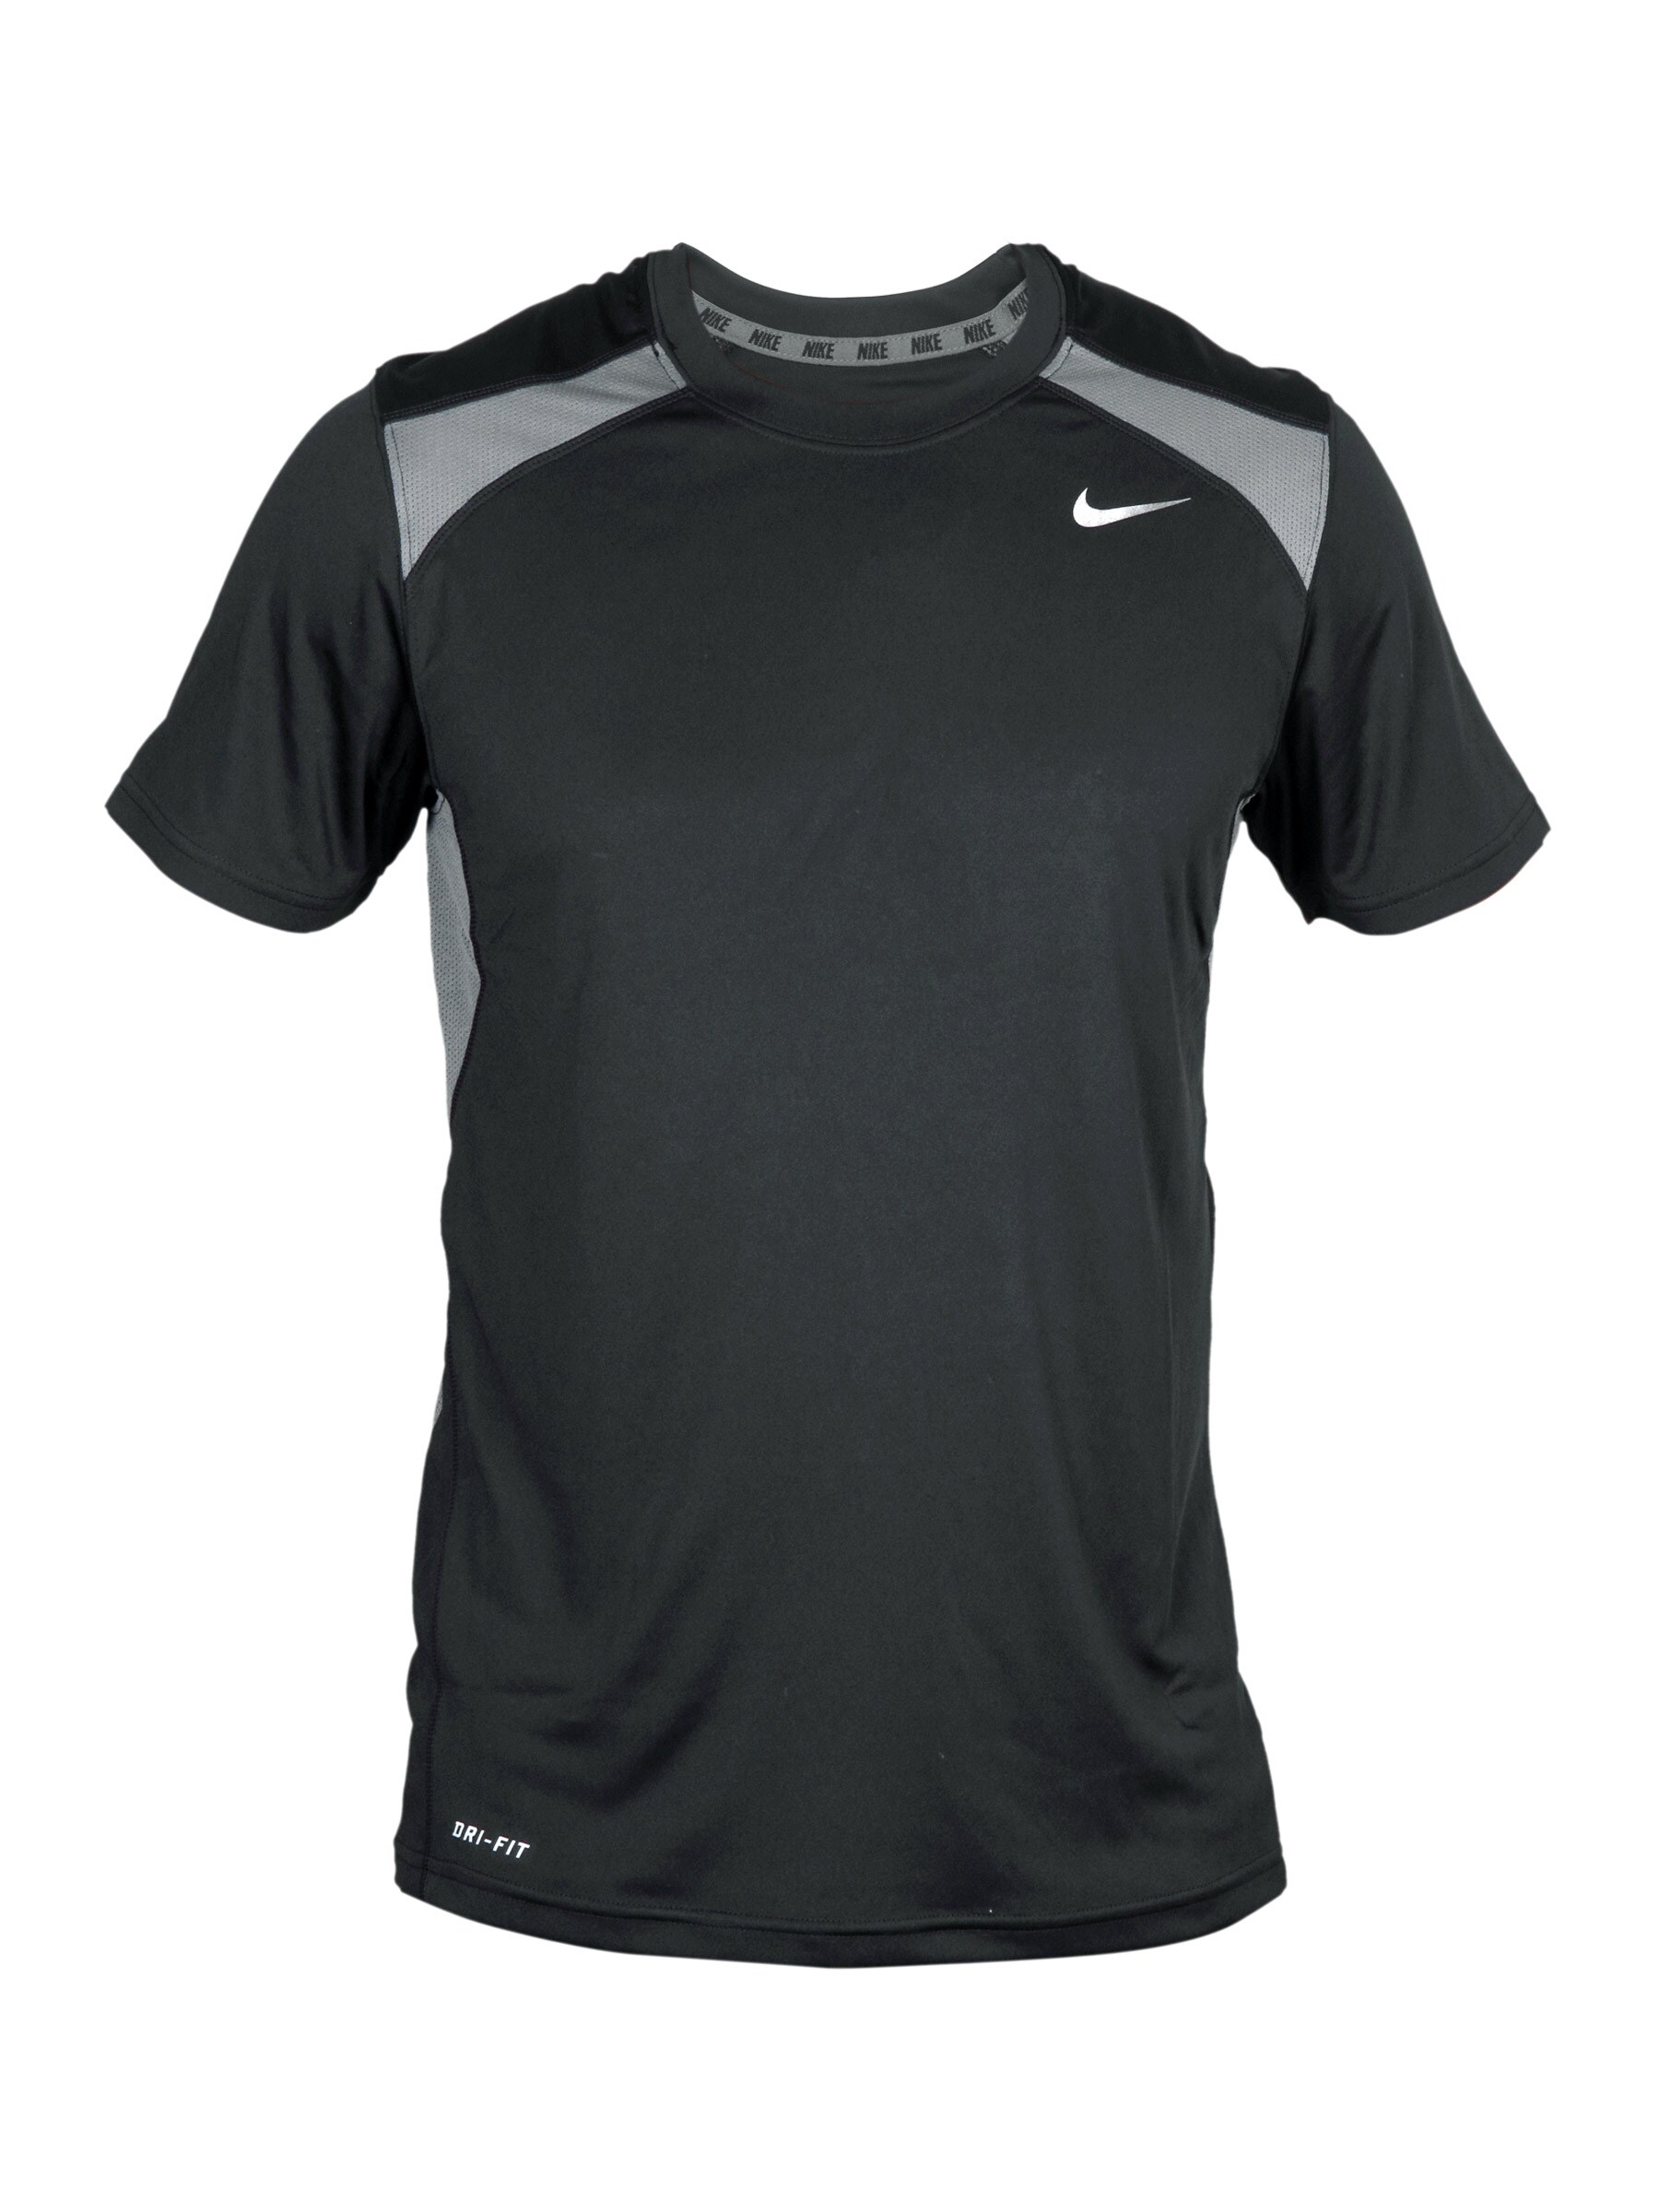 Nike Men's As Walkthrough Black T-shirt